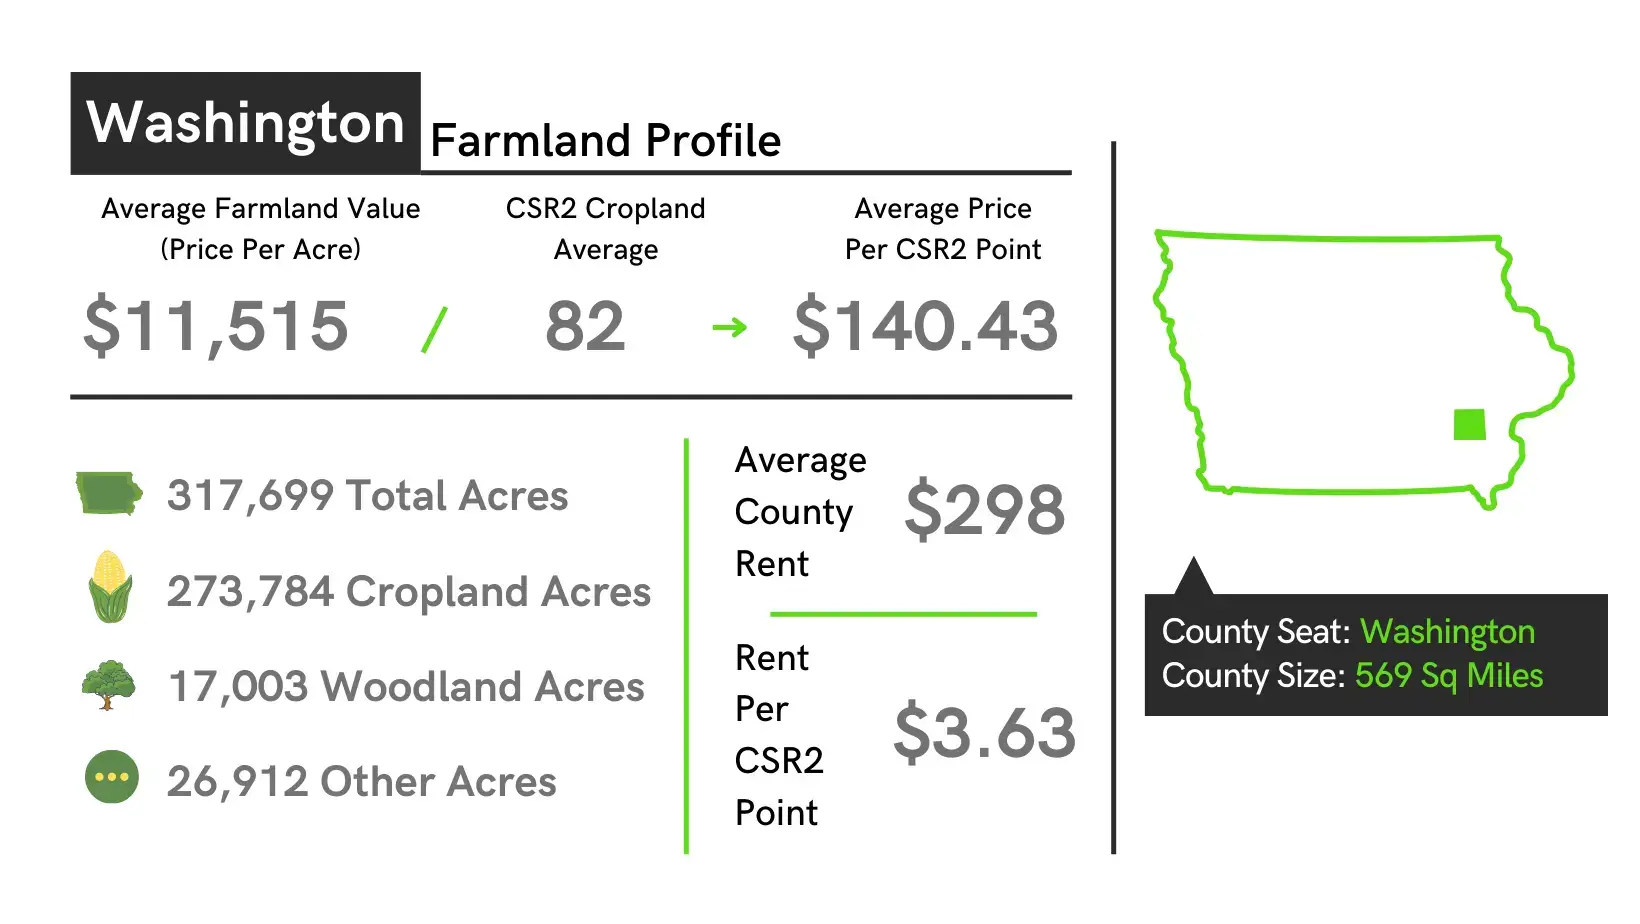 Washington County Farmland Profile